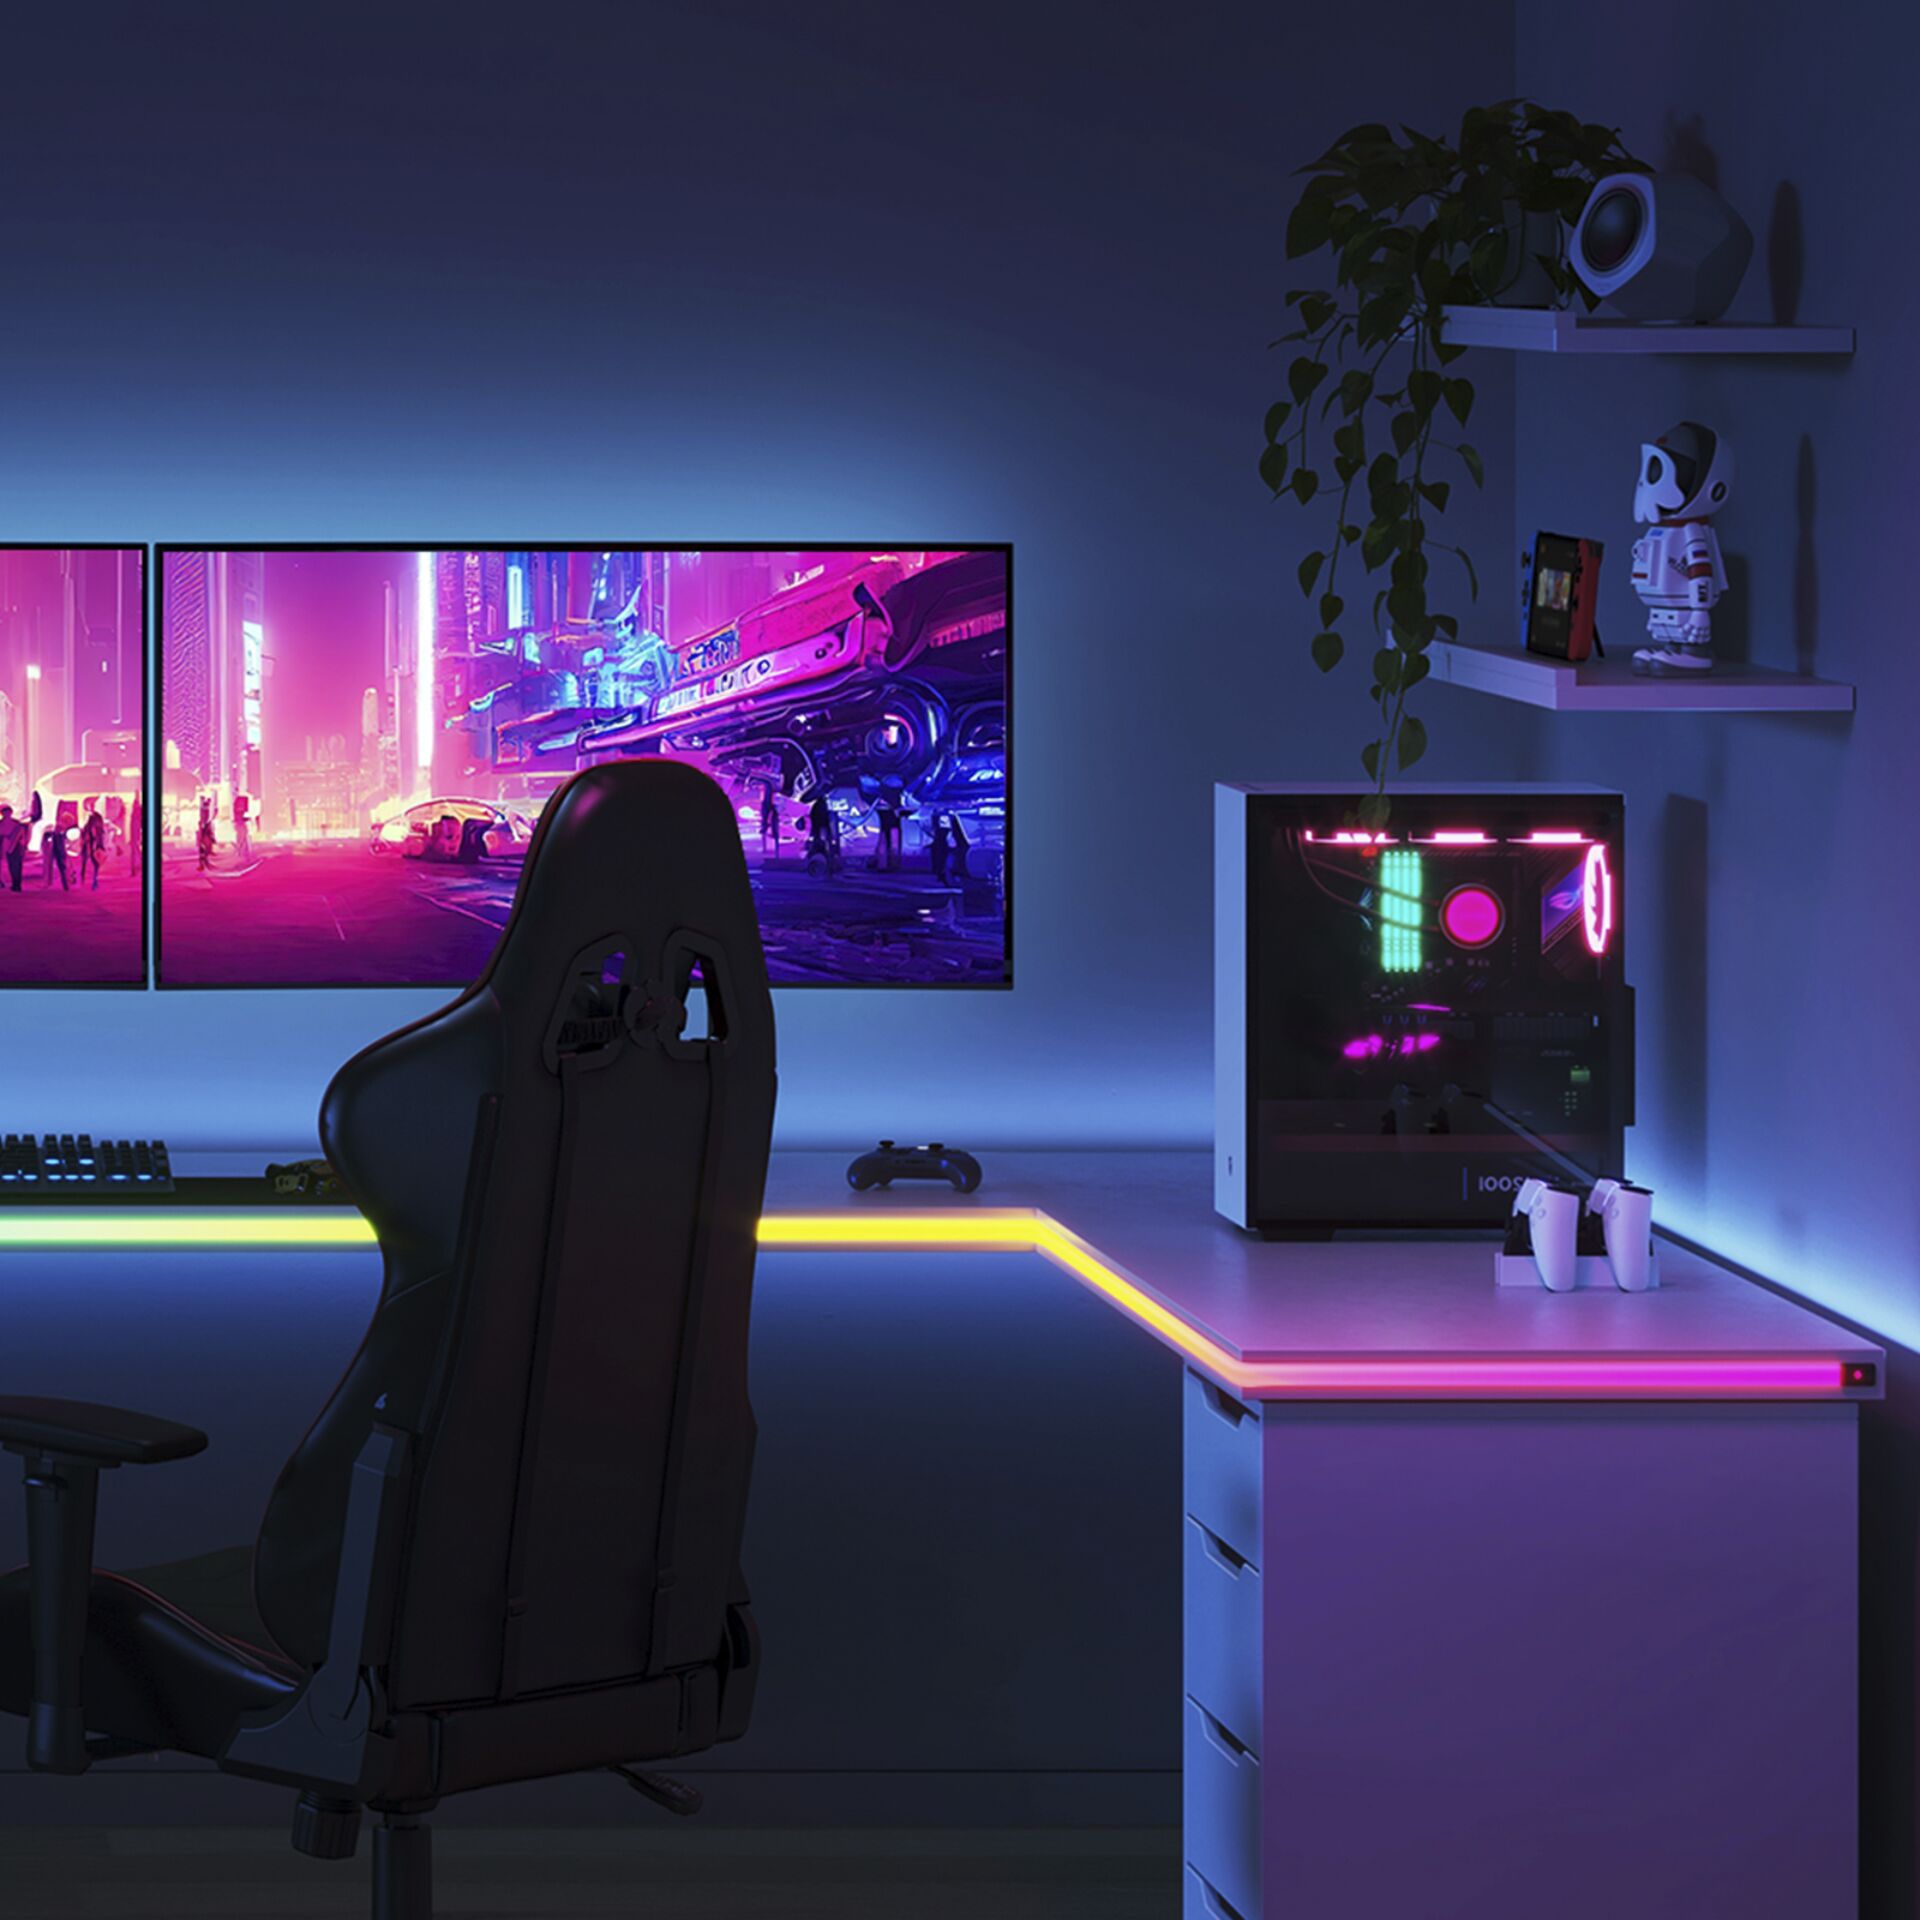 Govee Neon Gaming Bord Lys